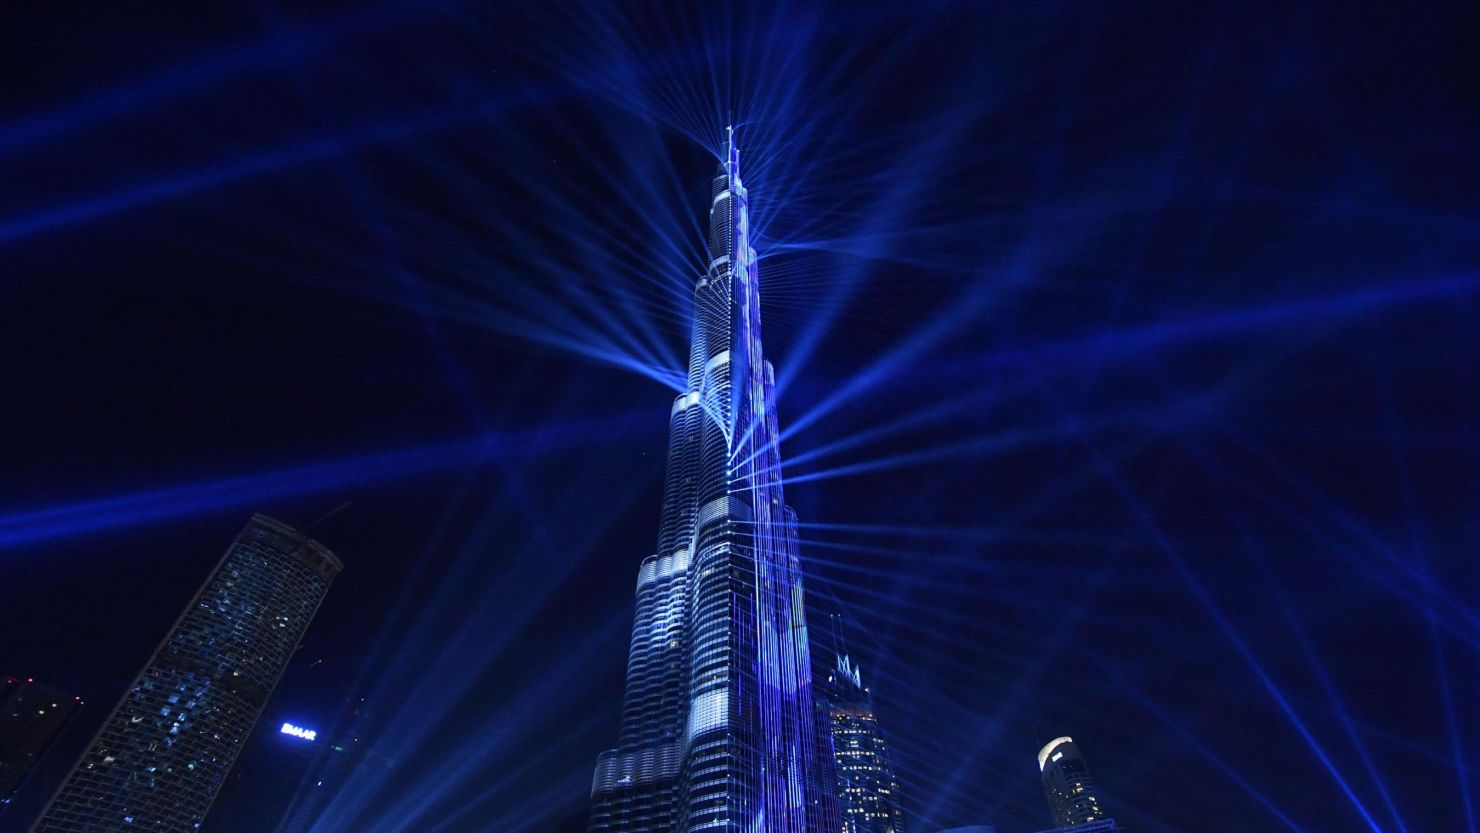 Dubai's Burj Khalifa, the tallest tower in the world